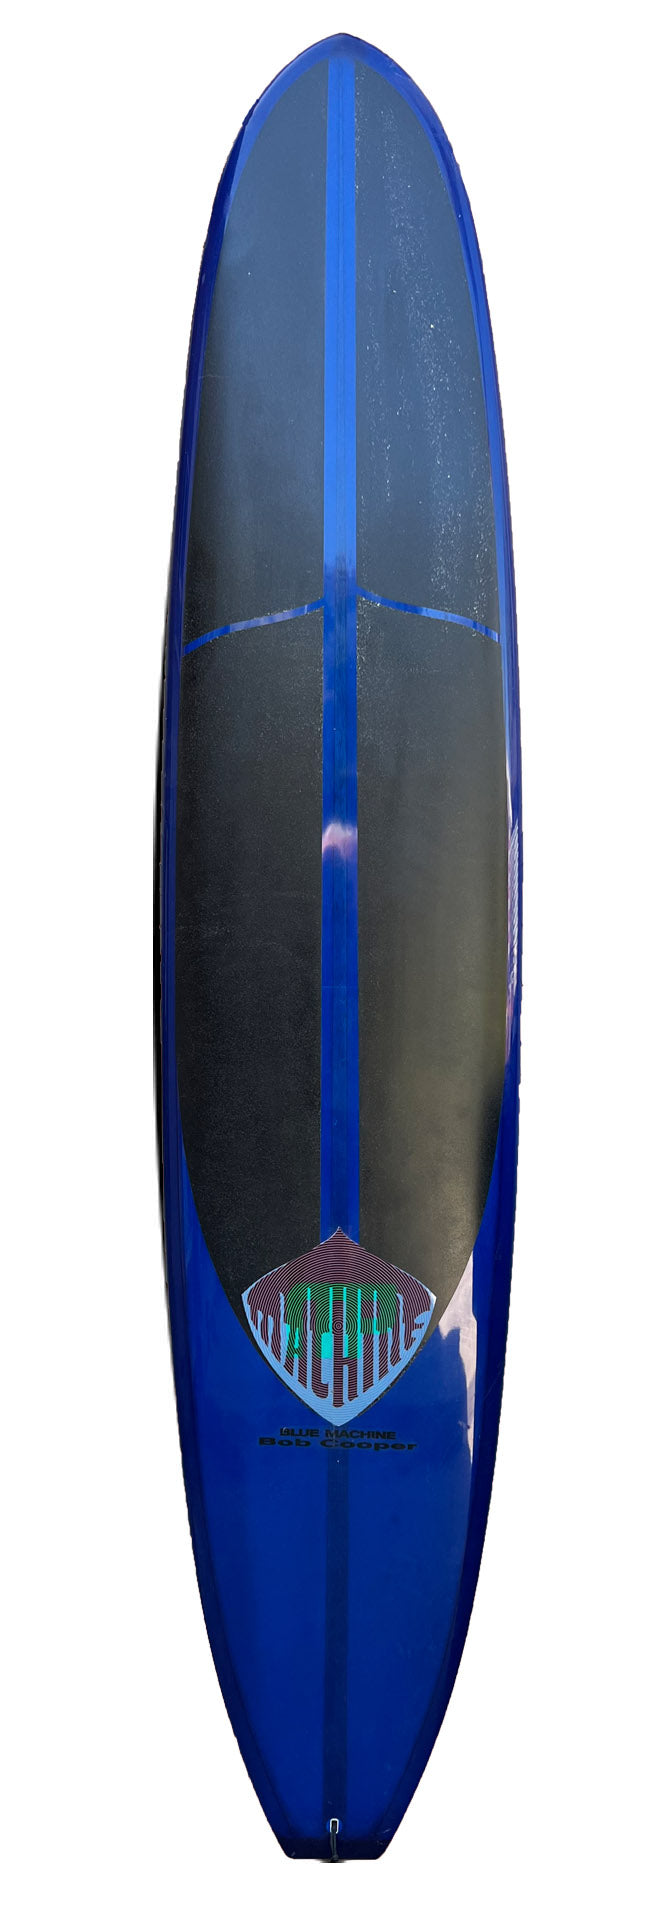 Sale 9'0 Blue Machine Replica – Walden Surfboards